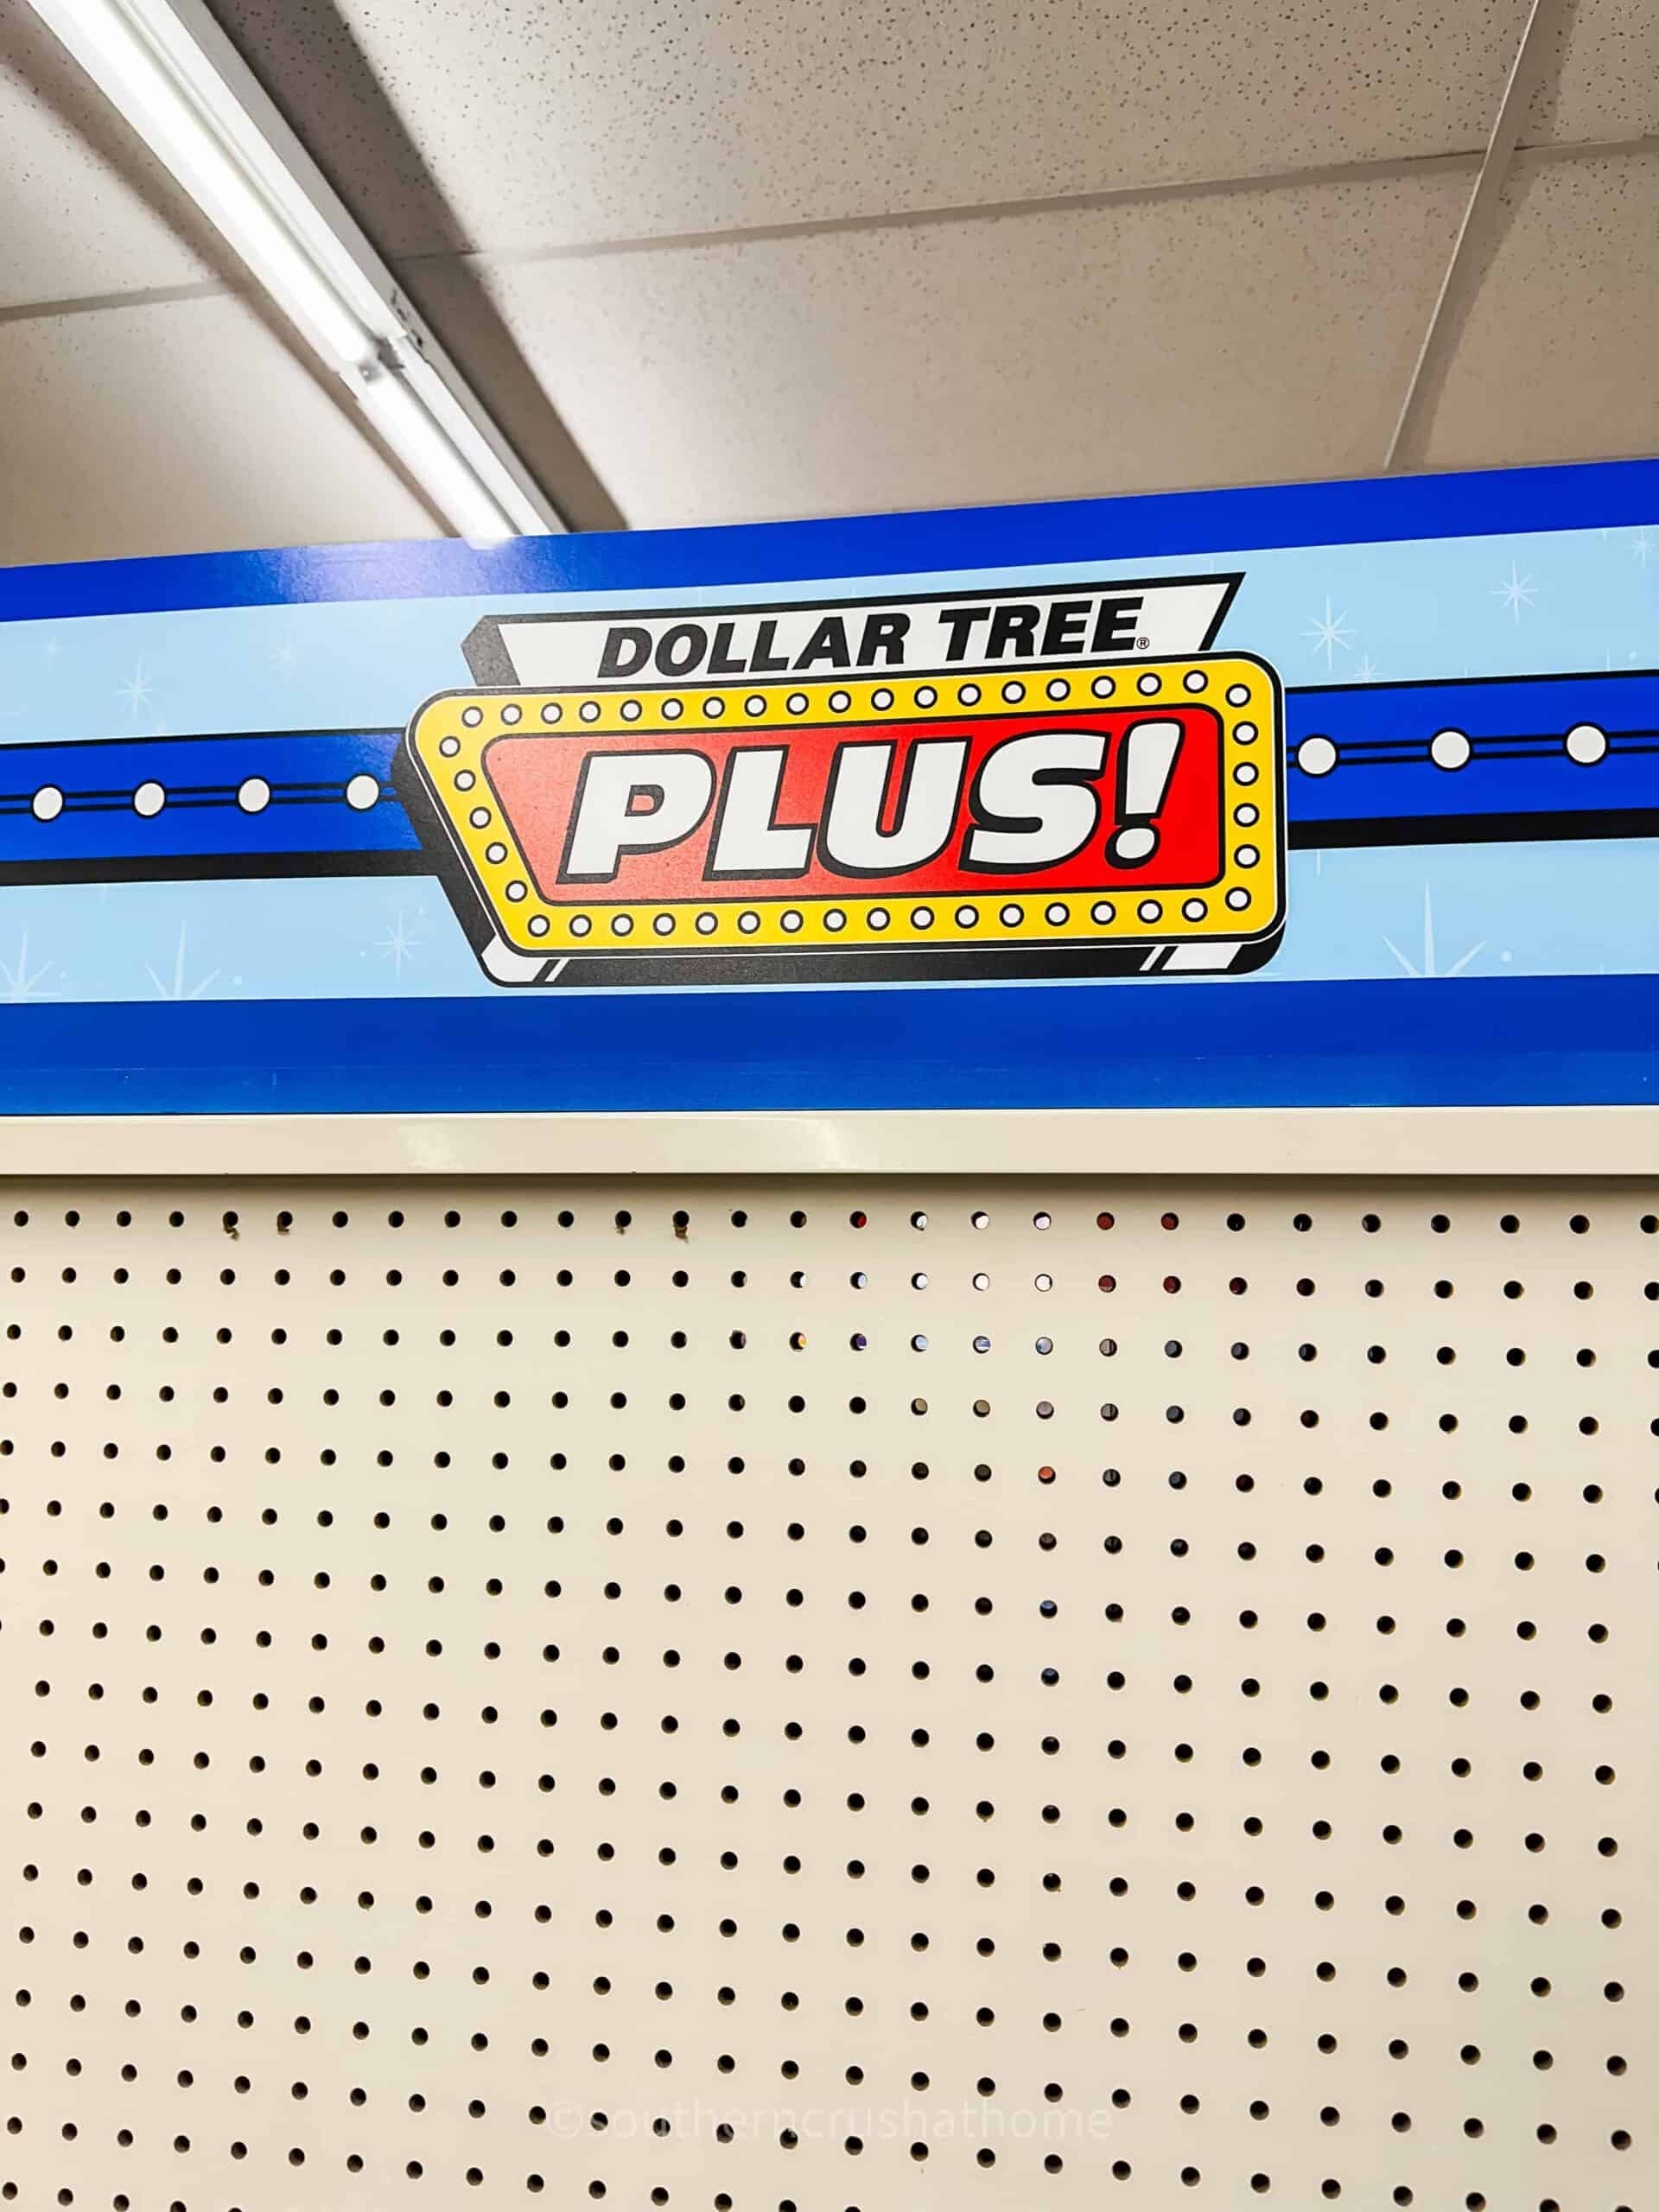 dollar tree plus signage